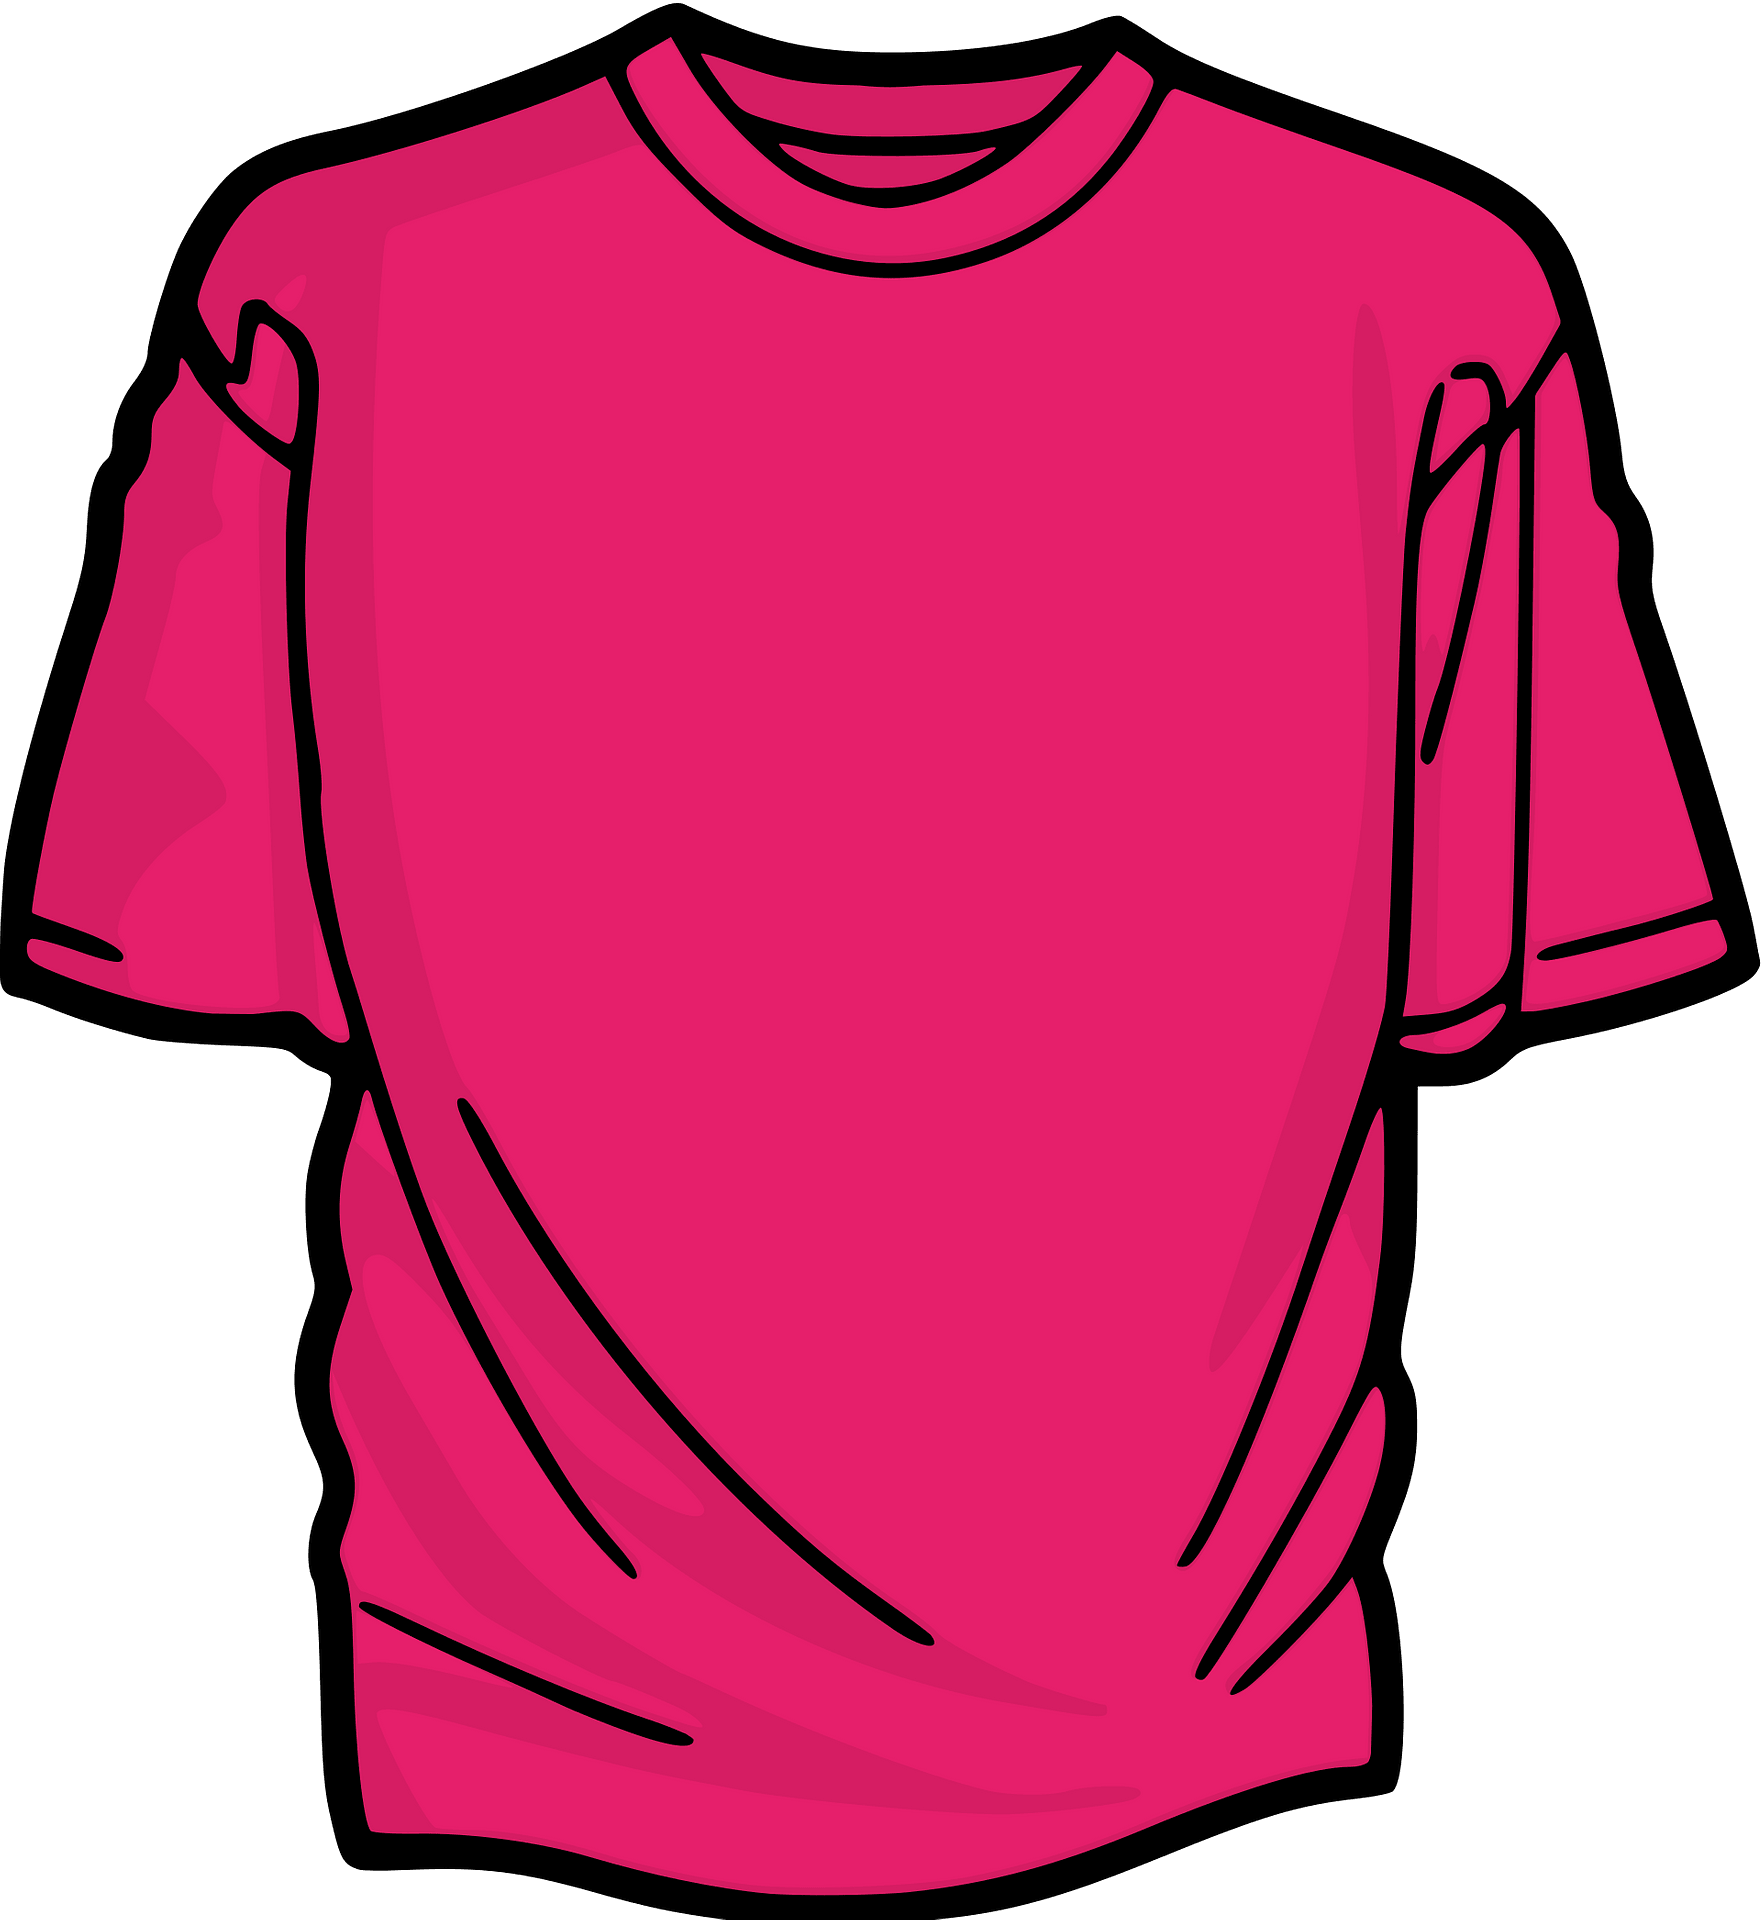 T-Shirt PNG Transparent Images Free Download - Pngfre